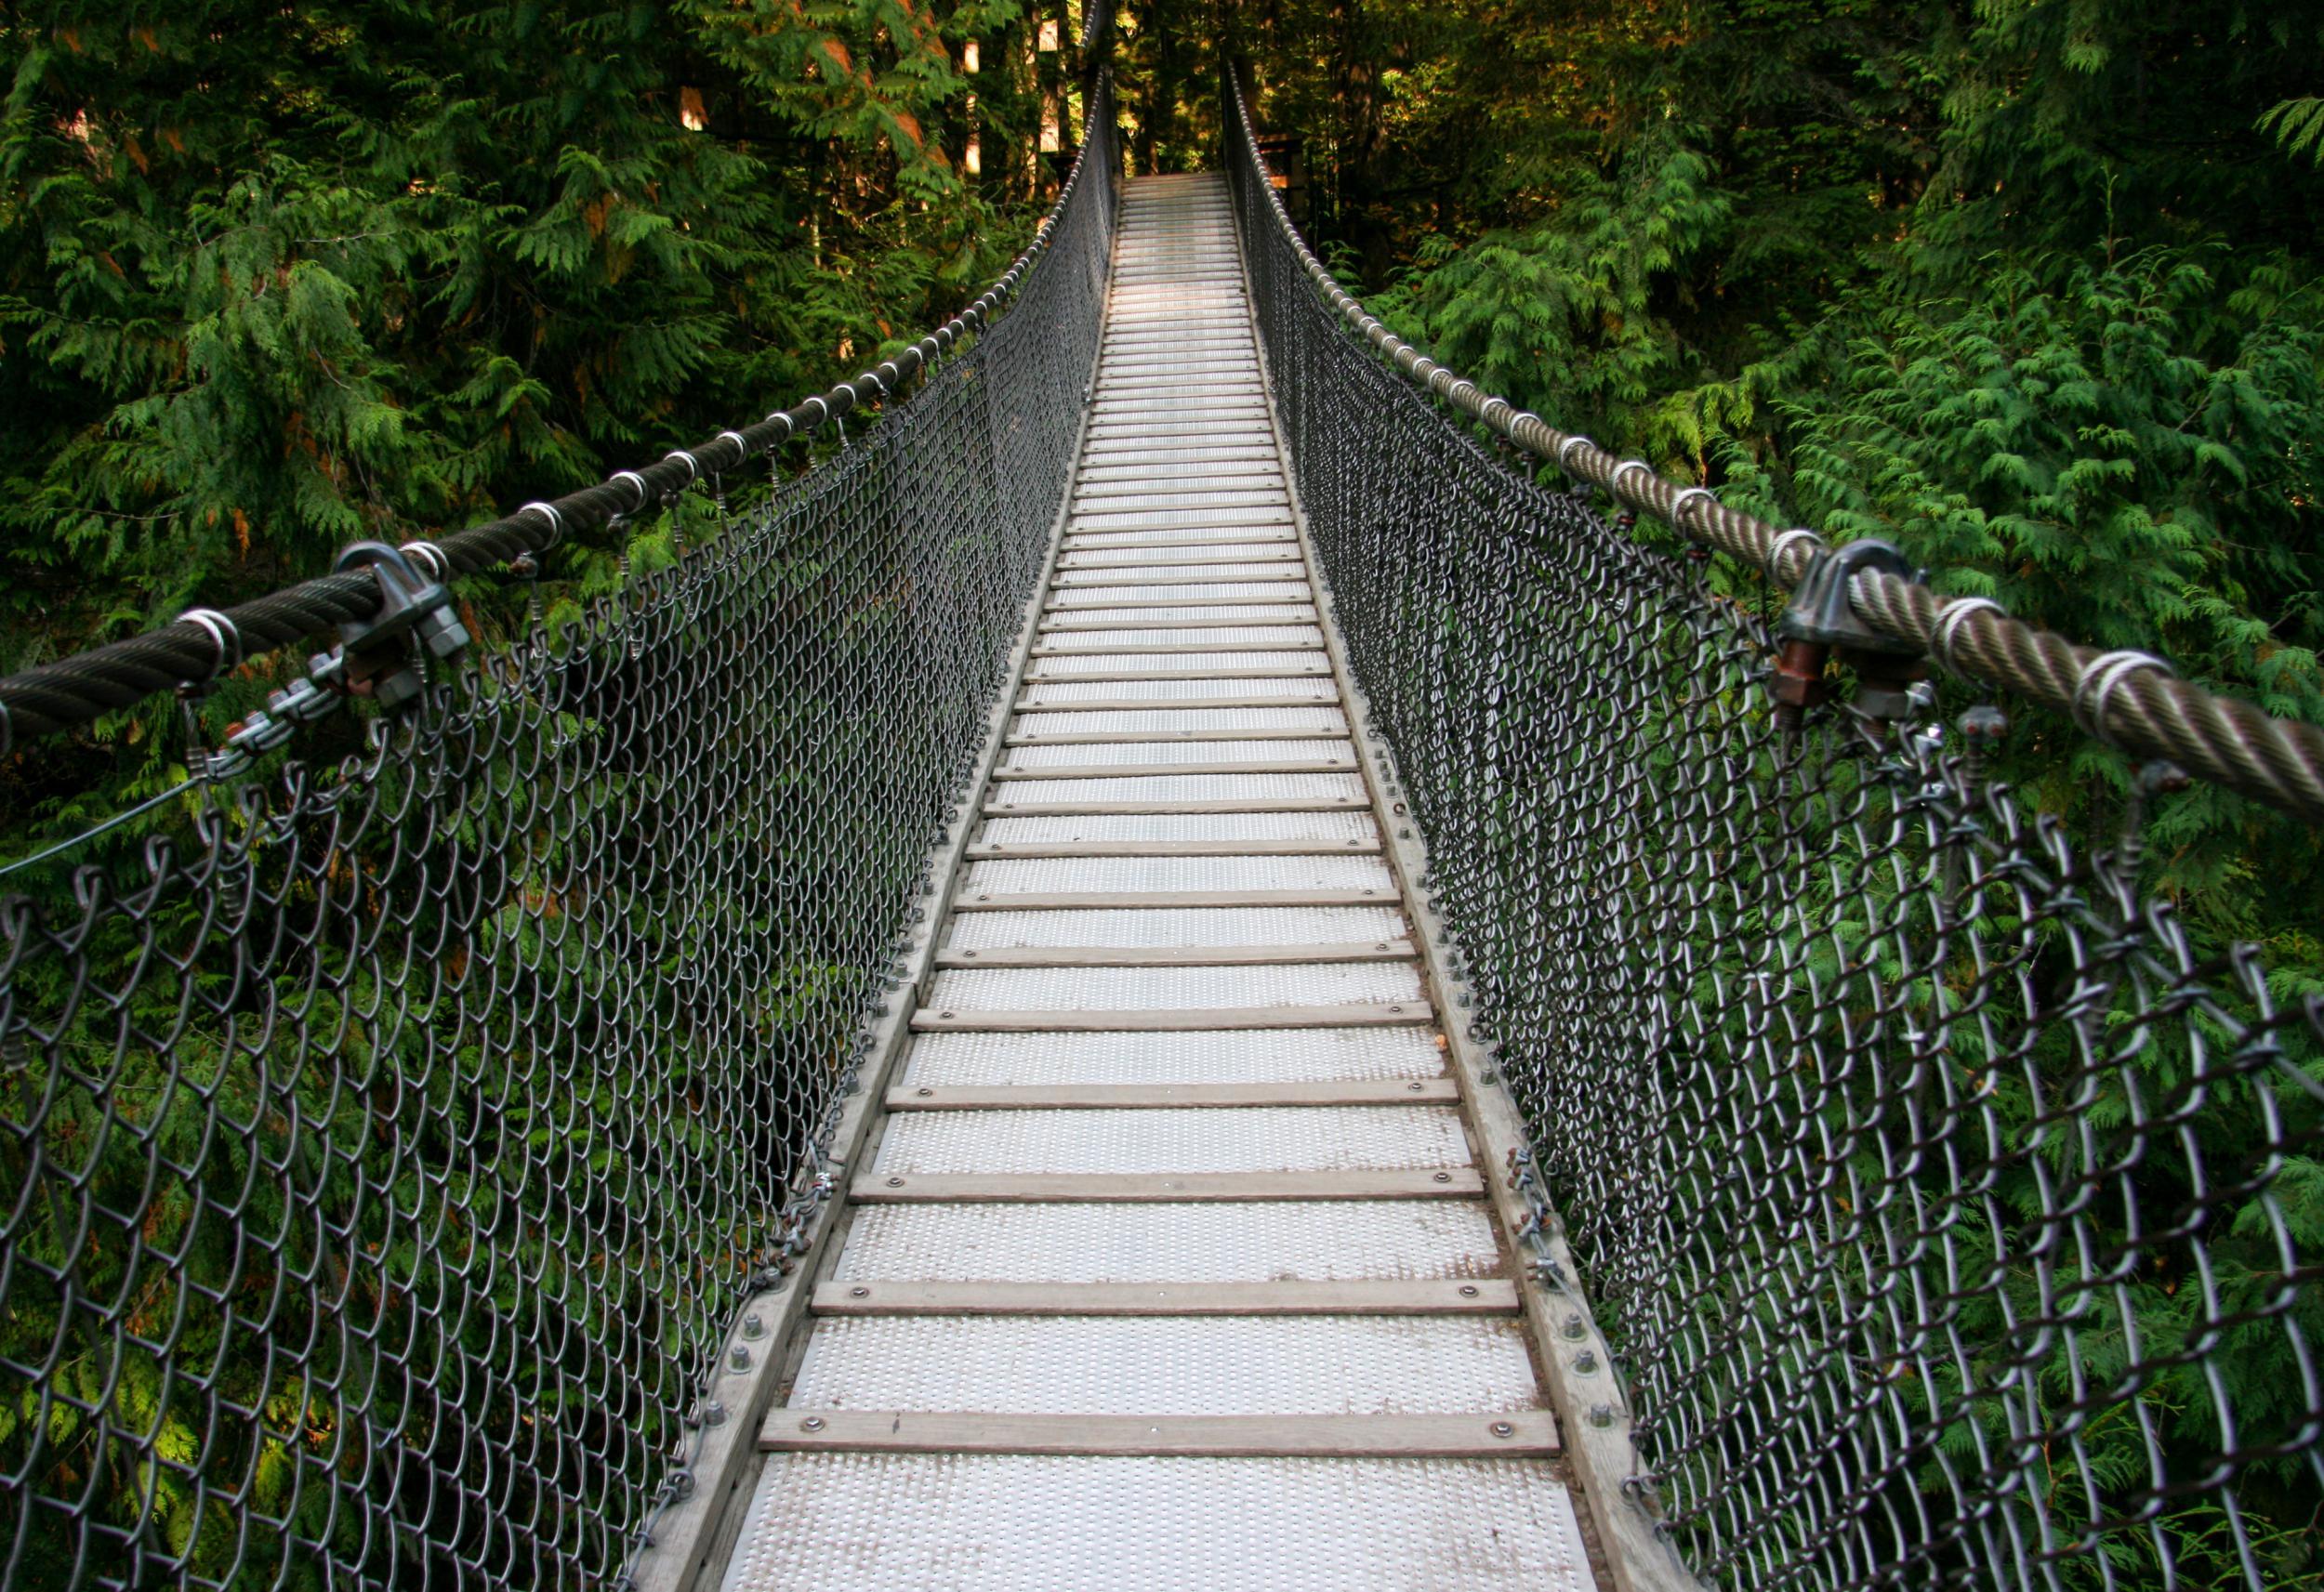 The suspension bridge at Lynn Canyon Park sways 50 metres above the canyon